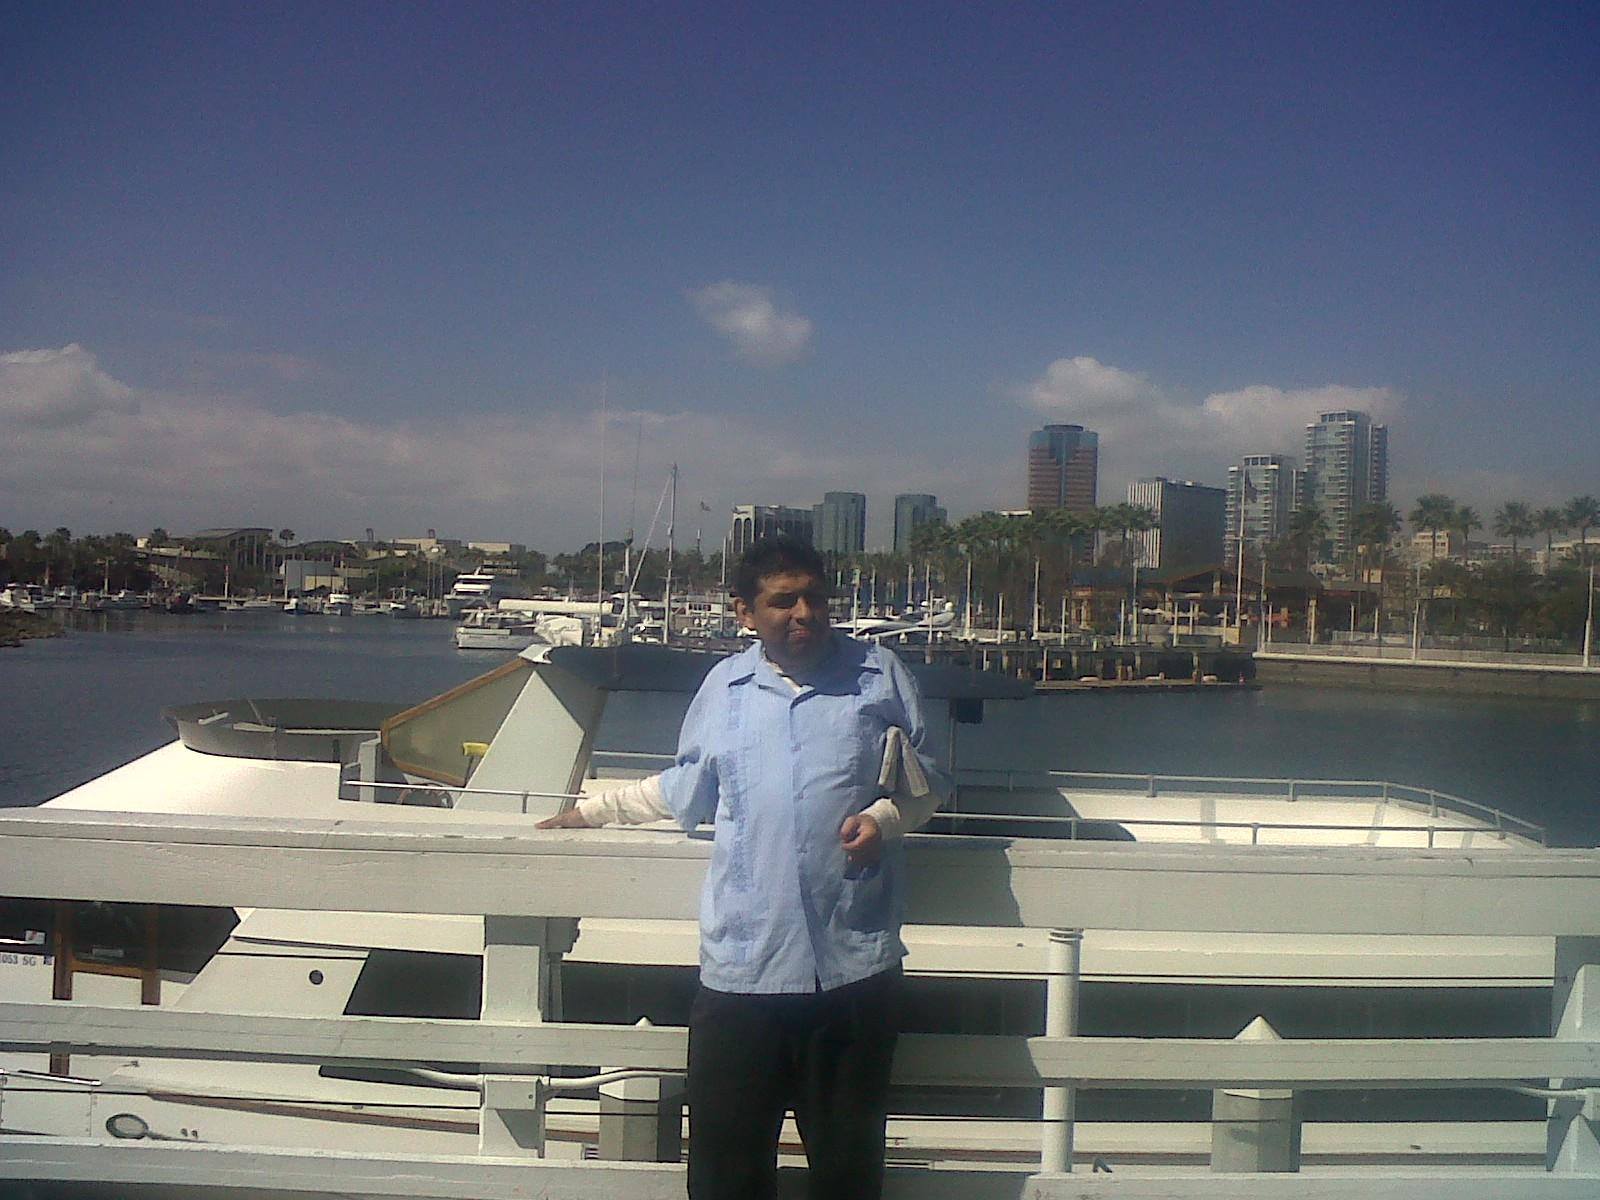 Antonio Moran posing at the marina.